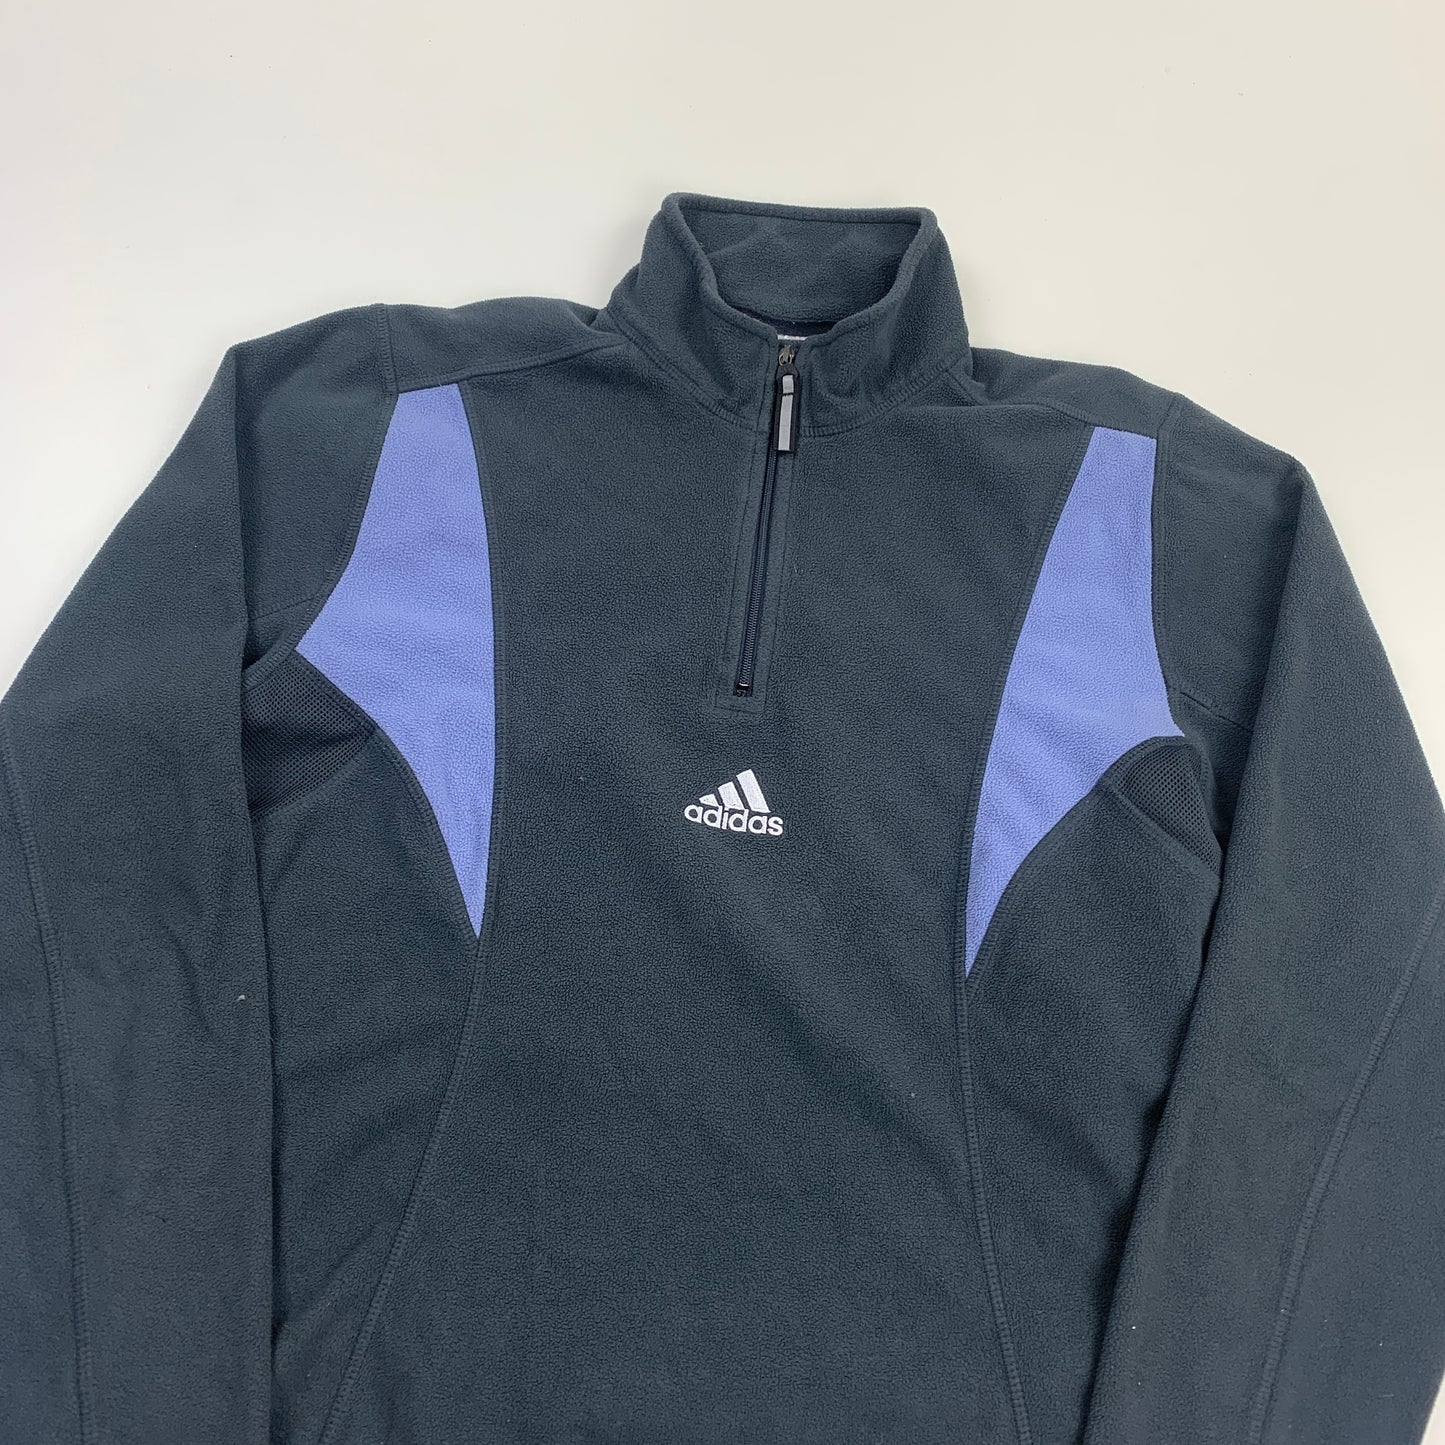 Adidas Quarter Zip Fleece Sweater (Center Logo) - S